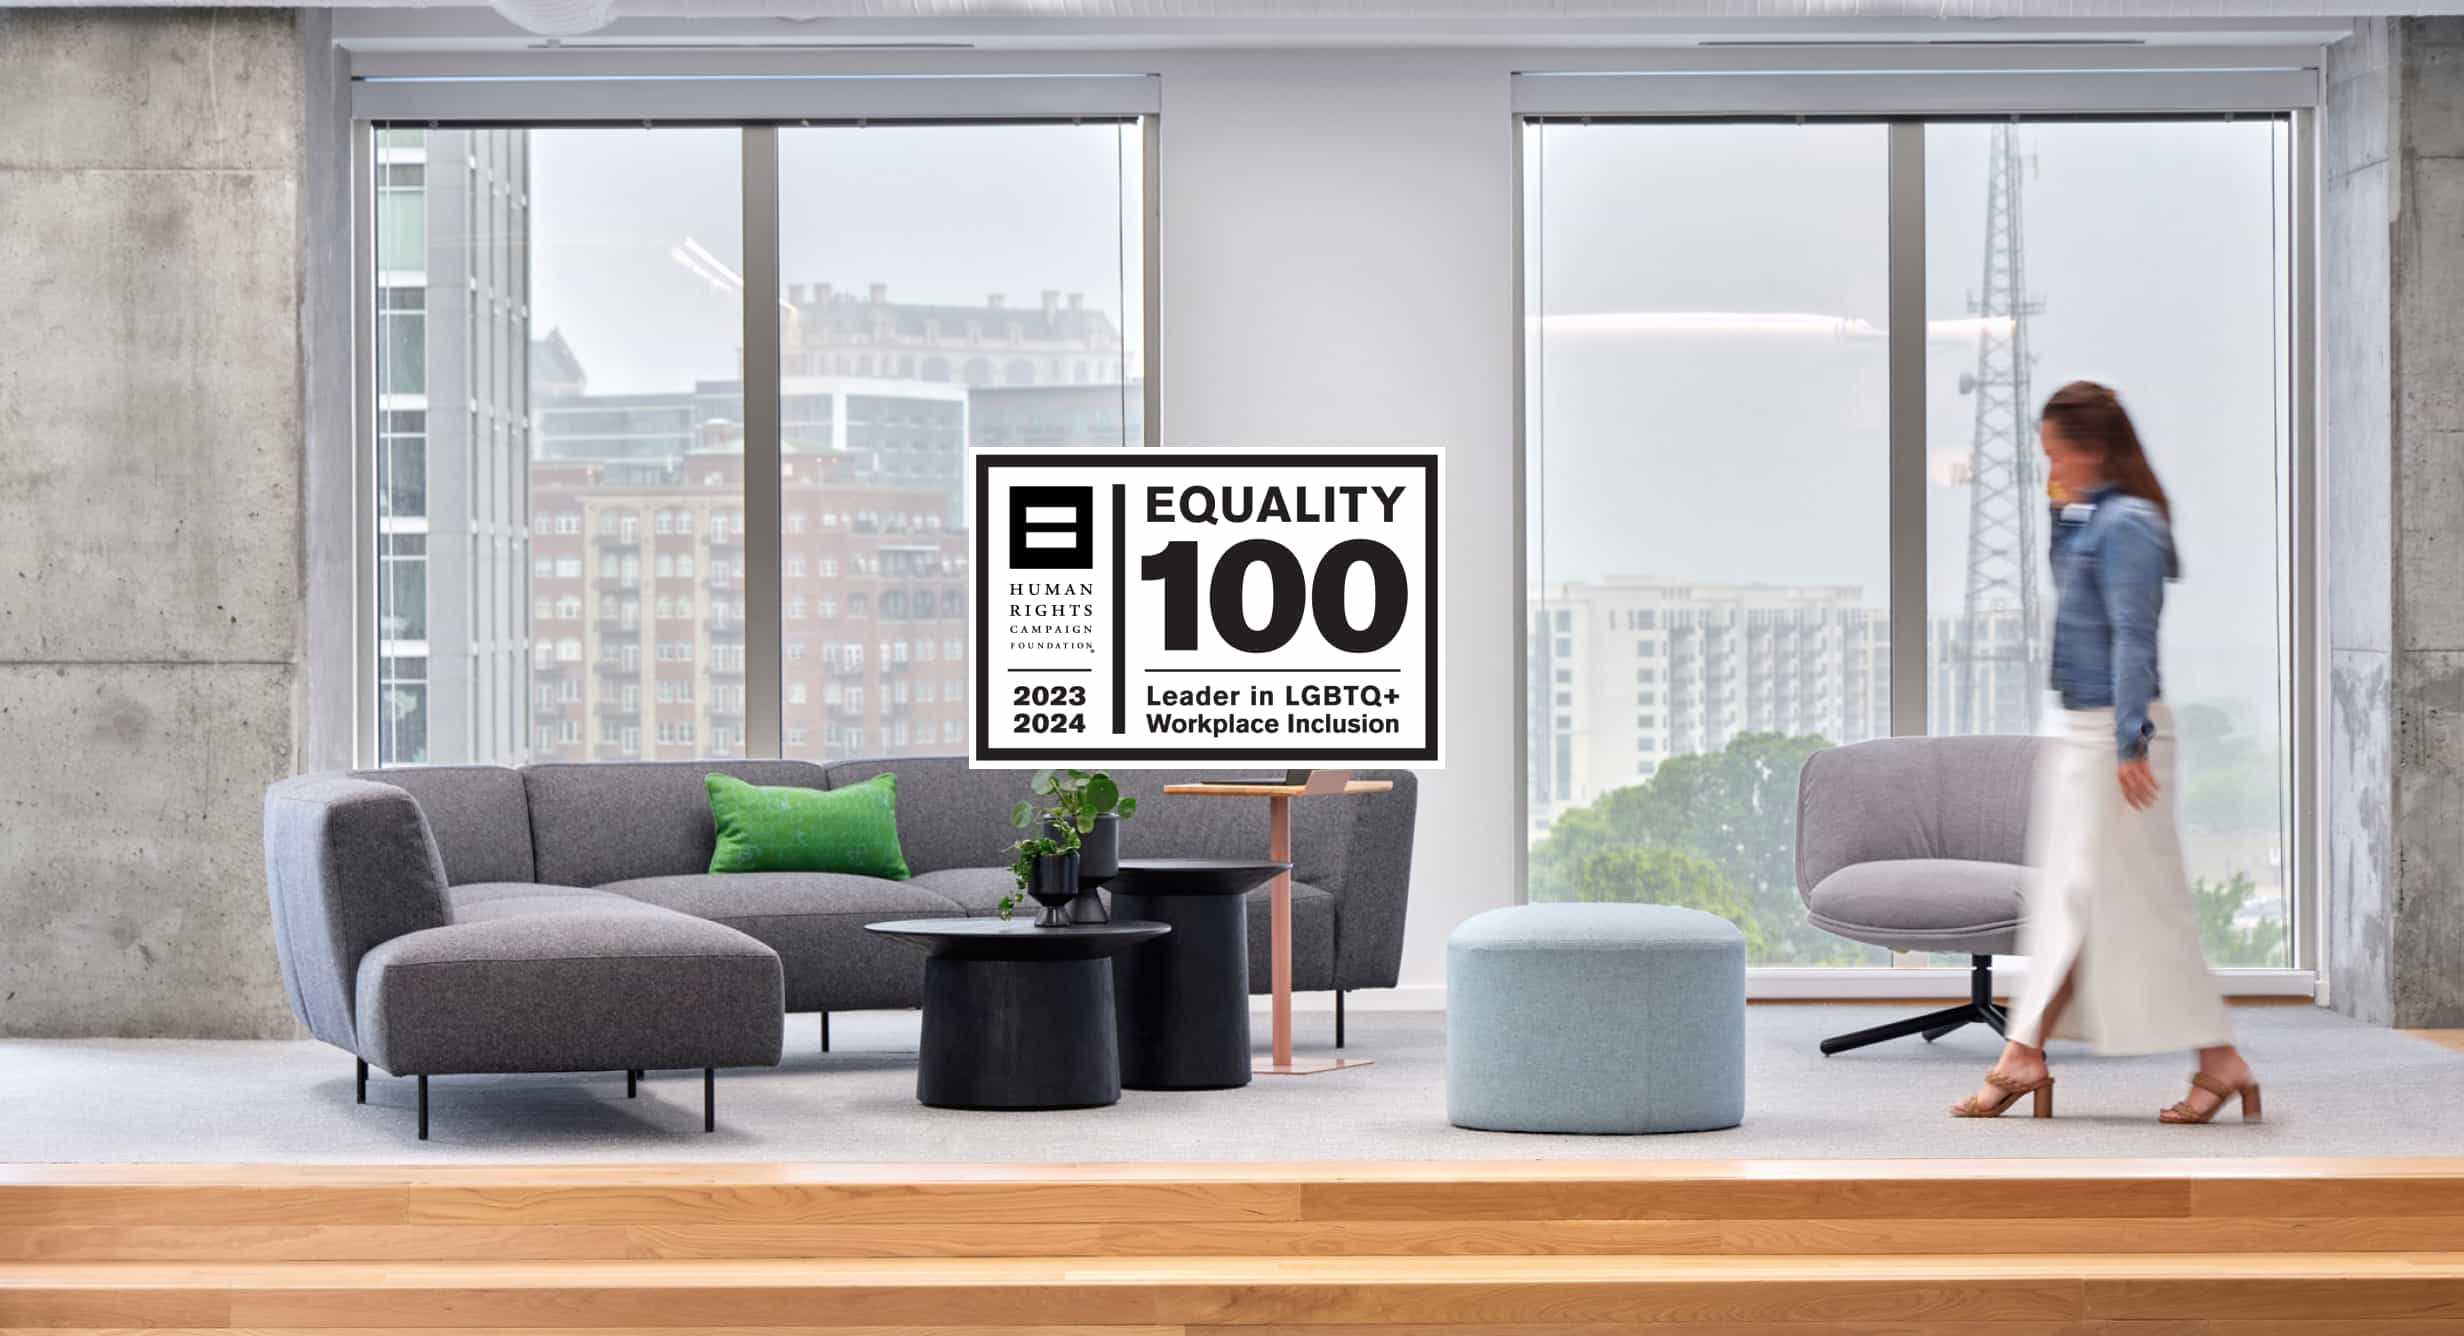 HKS凭借在LGBTQ+工作场所包容性方面的卓越表现荣获Equality 100奖项